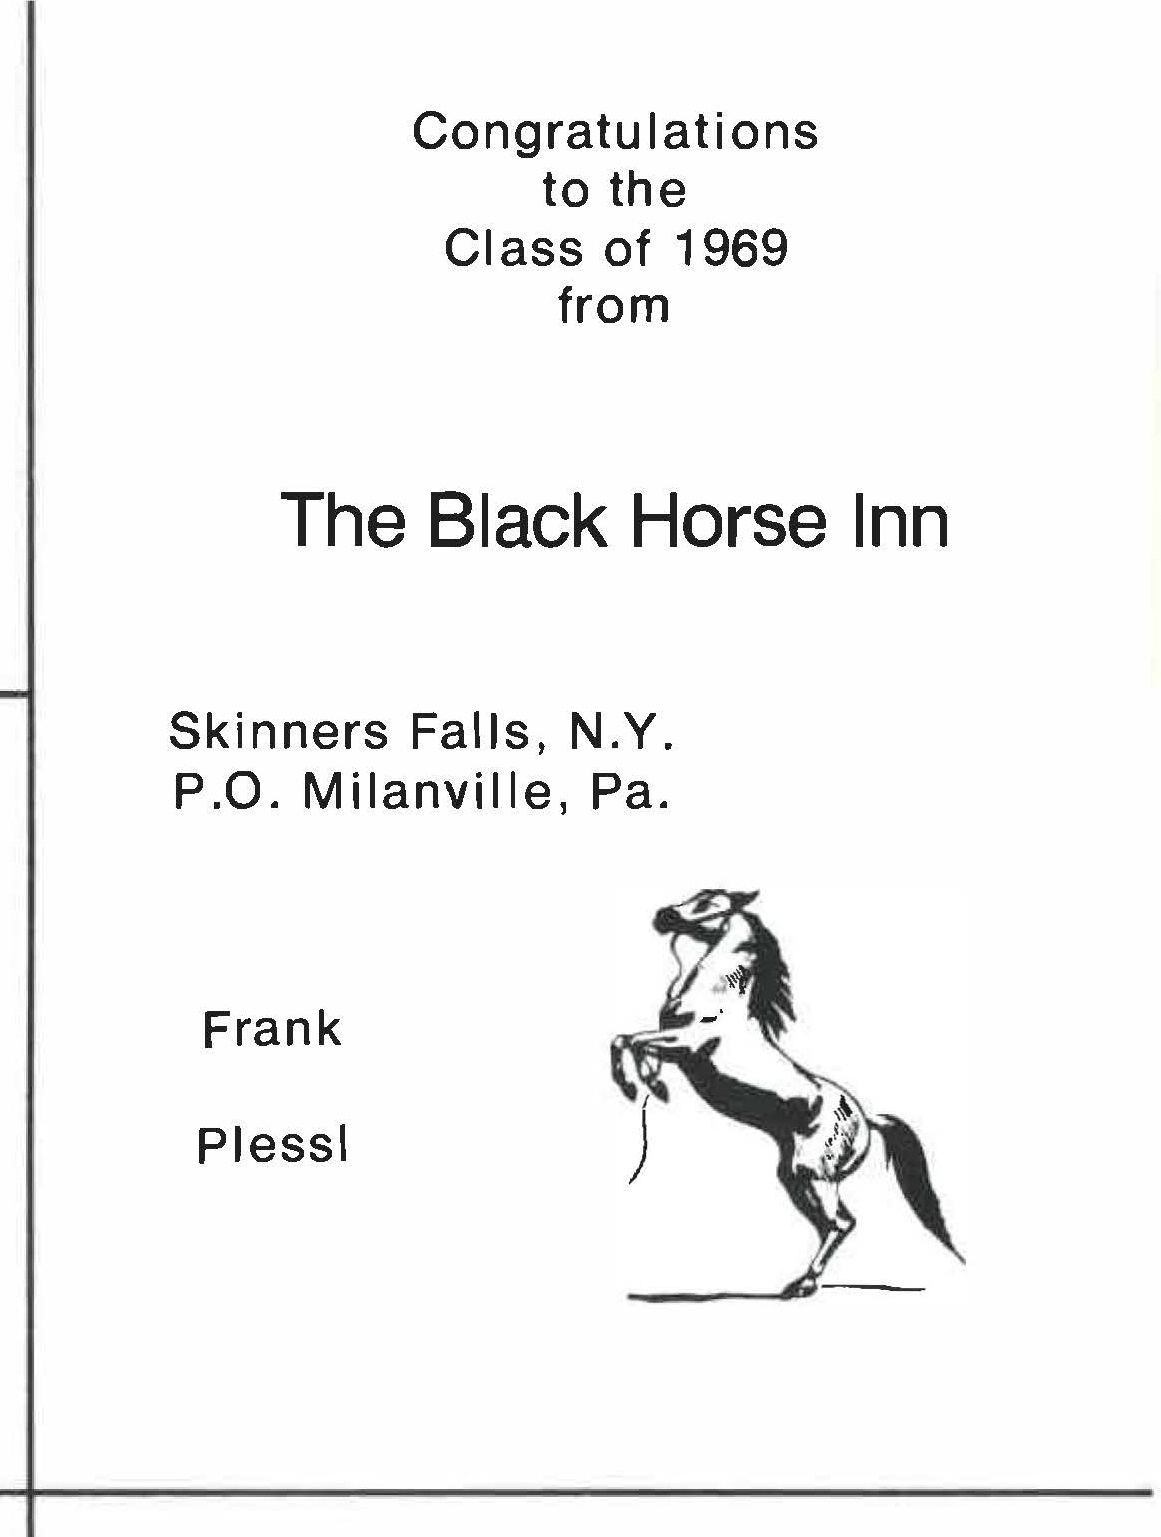 Ad for The Black Horse Inn in the 1969 high school year book, Narrowsburg CSD.